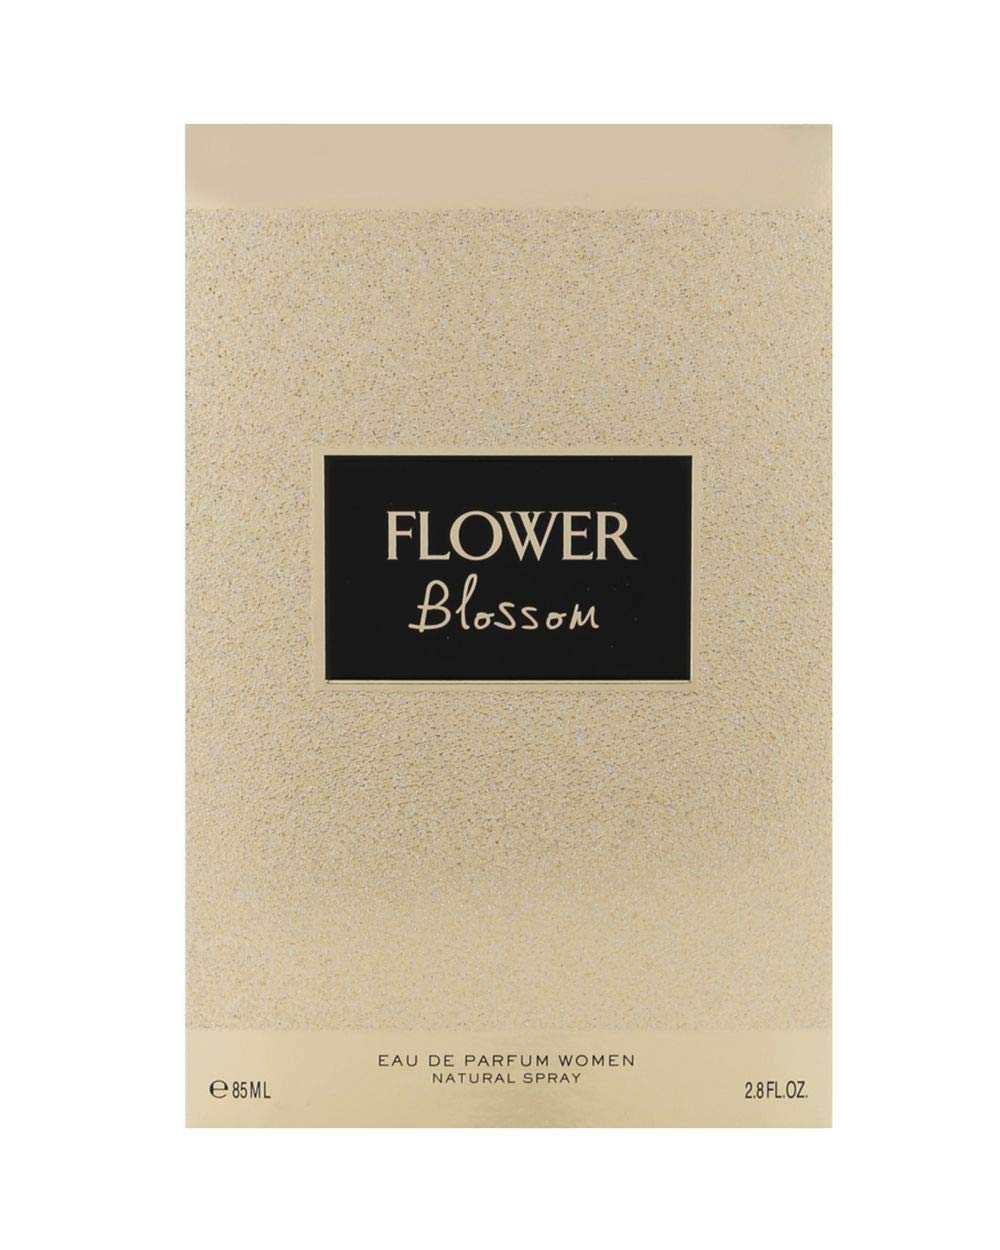 FLOWER BLOSSOM BY GEMINA B GEPARLYS PERFUME FOR WOMEN 2.8 OZ / 85 ML EAU DE PARFUM SPRAY